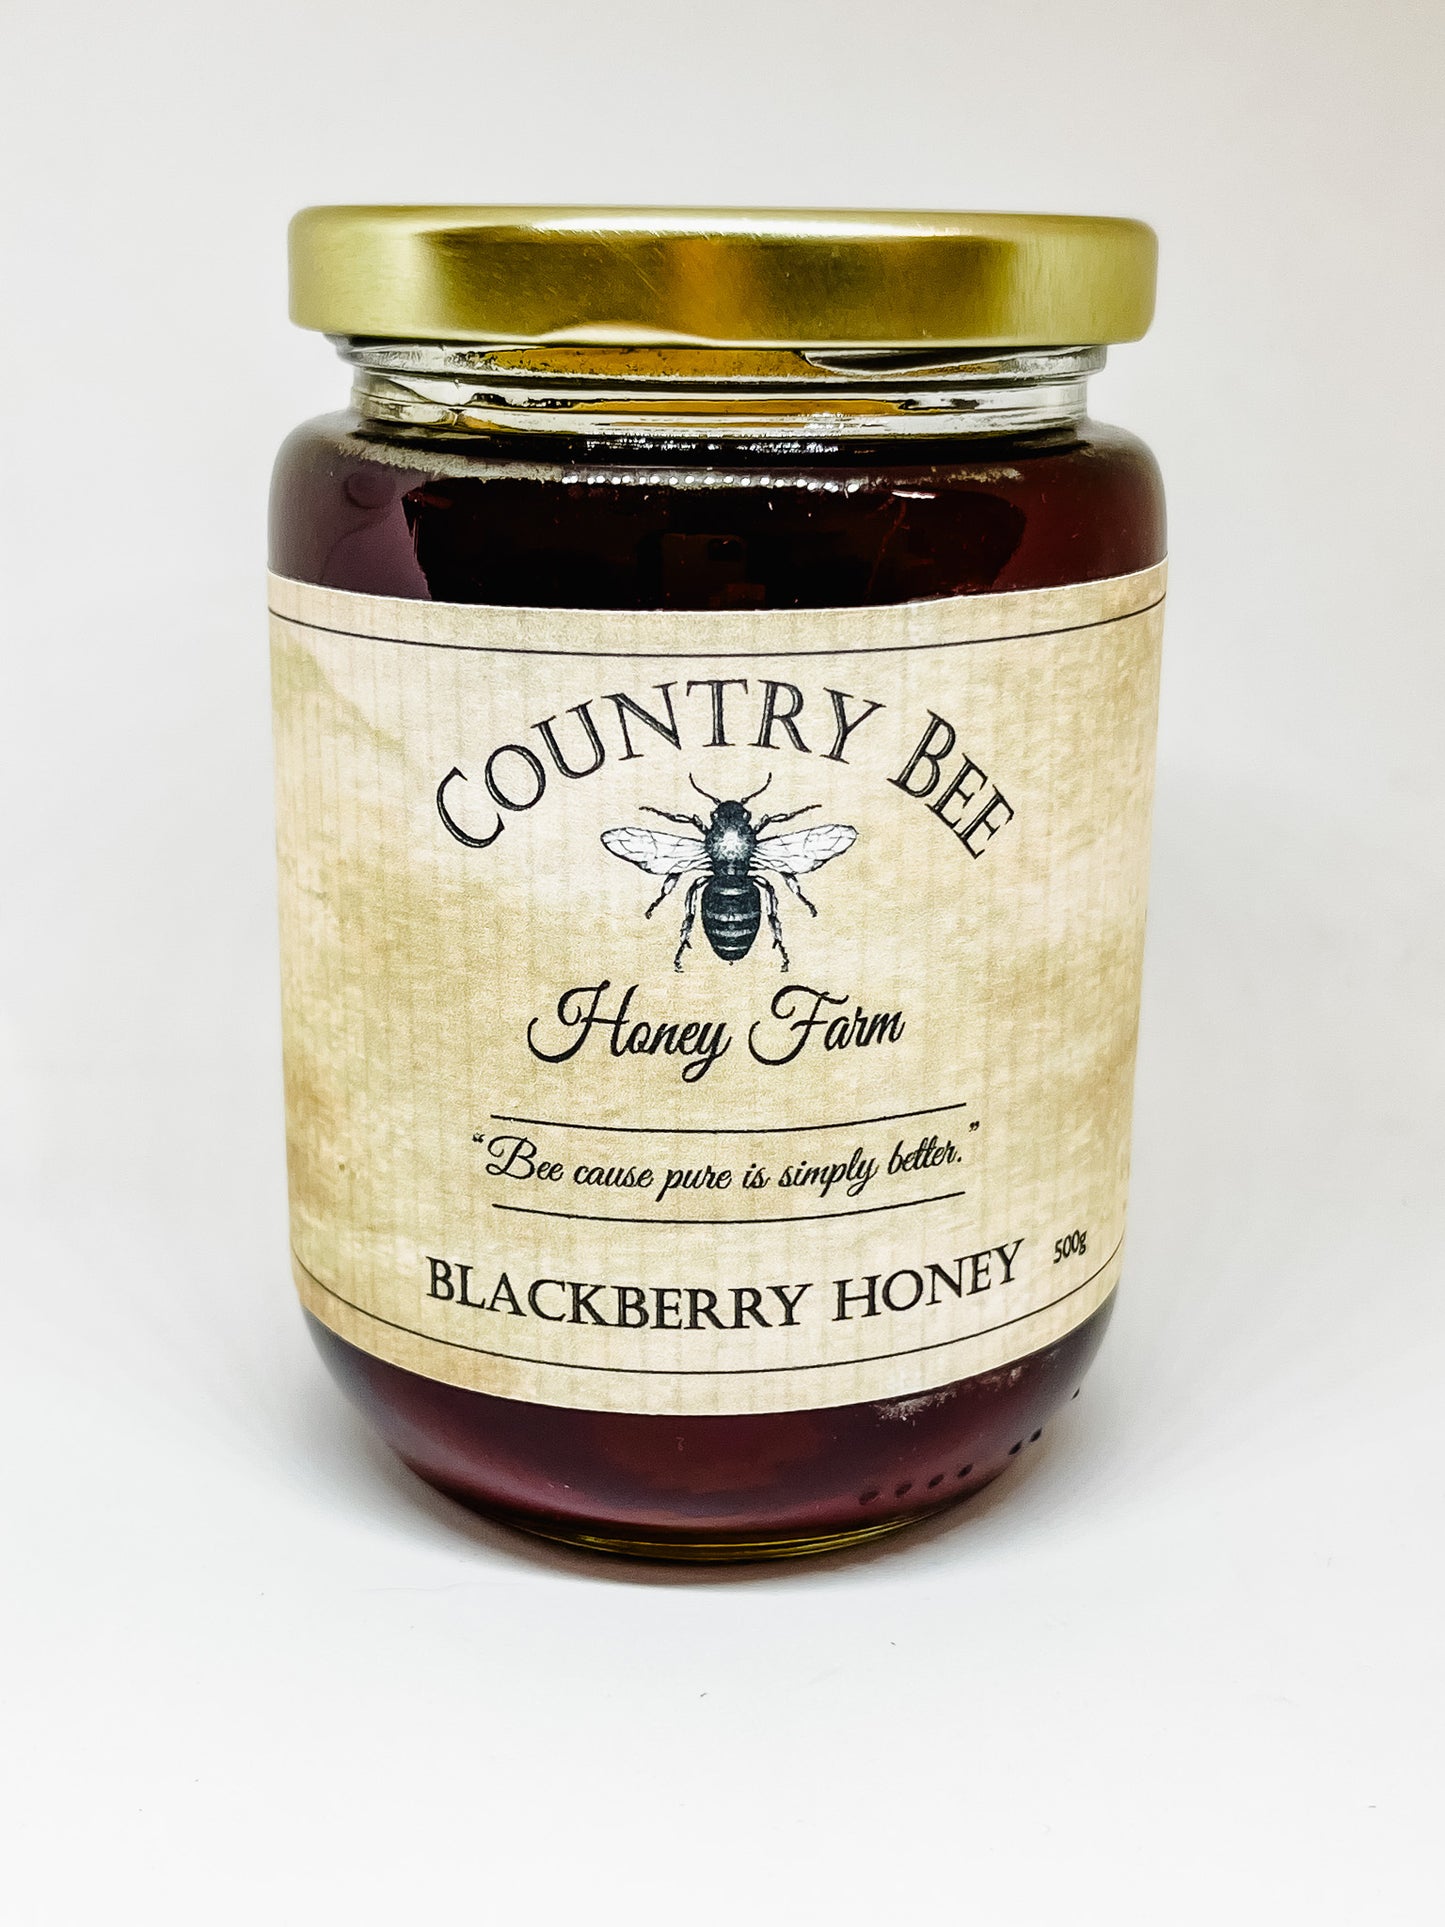 Miel de mûre de Country Bee Honey Farm